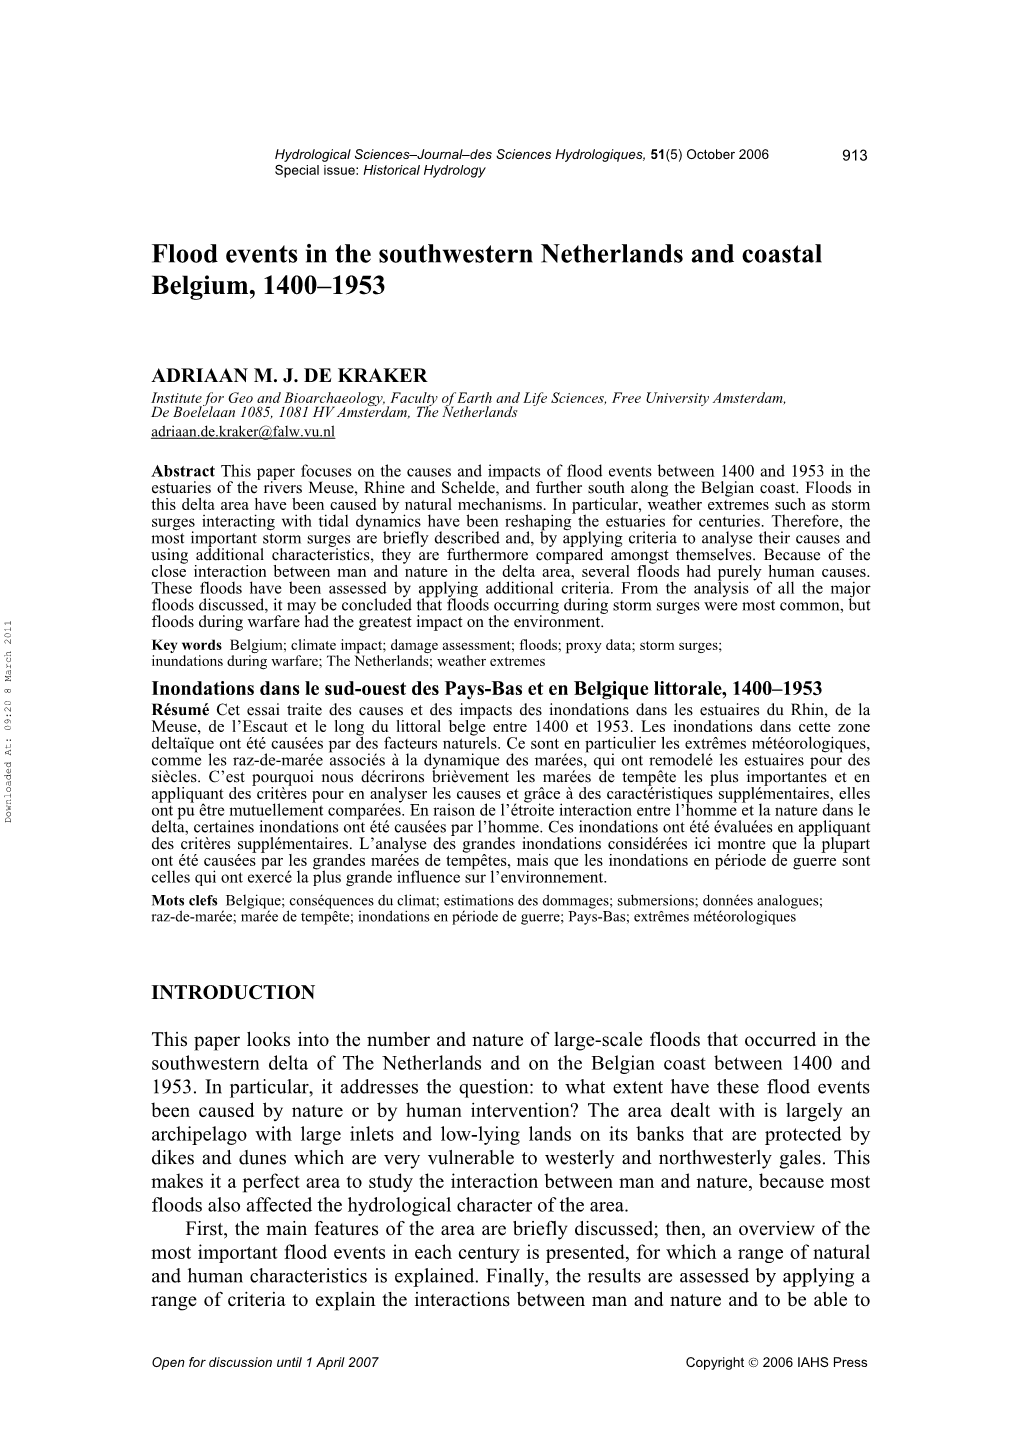 Flood Events in the Southwestern Netherlands and Coastal Belgium, 1400–1953